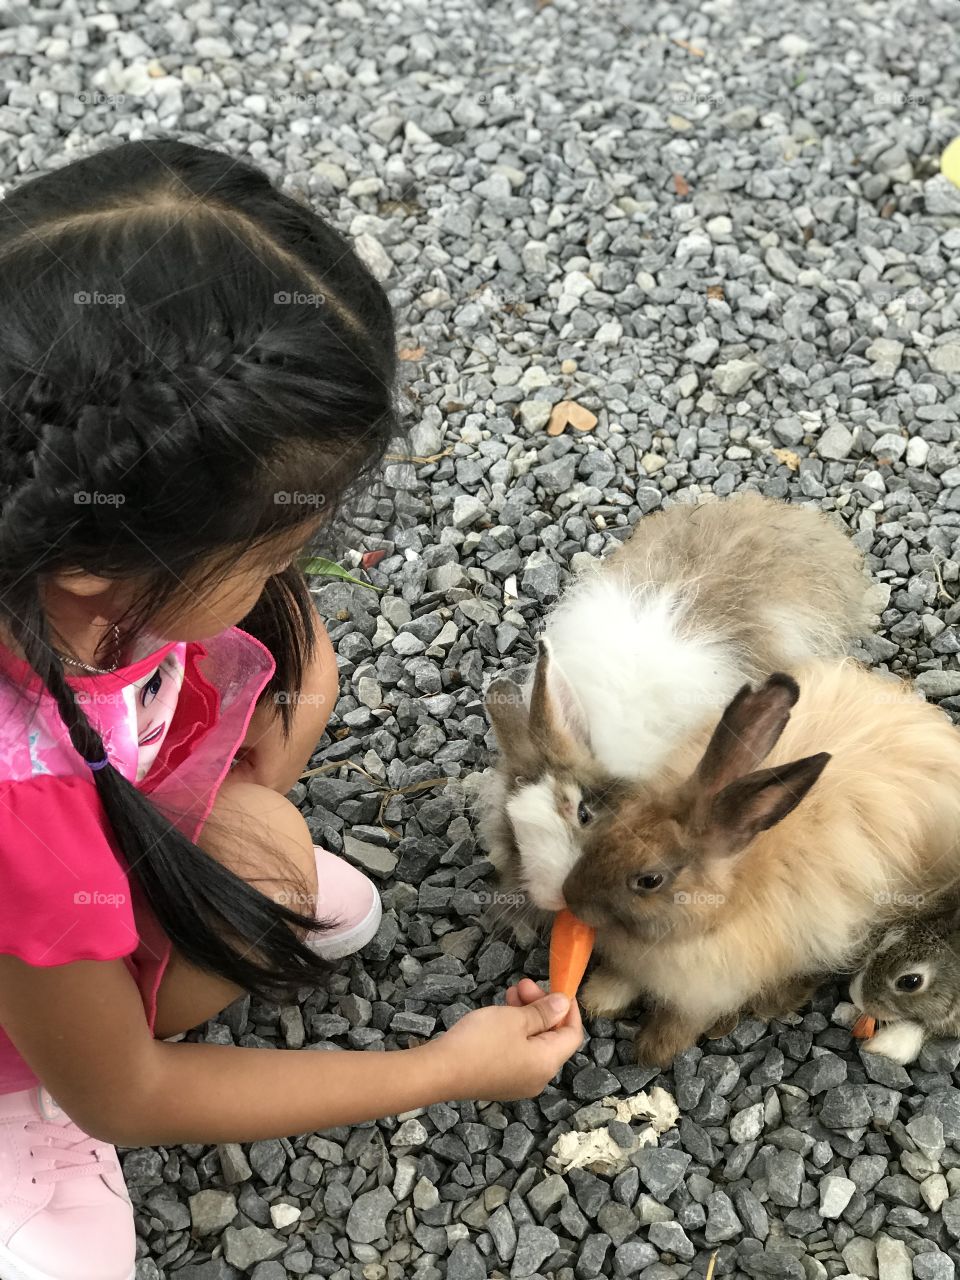 Feeding a rabbit.